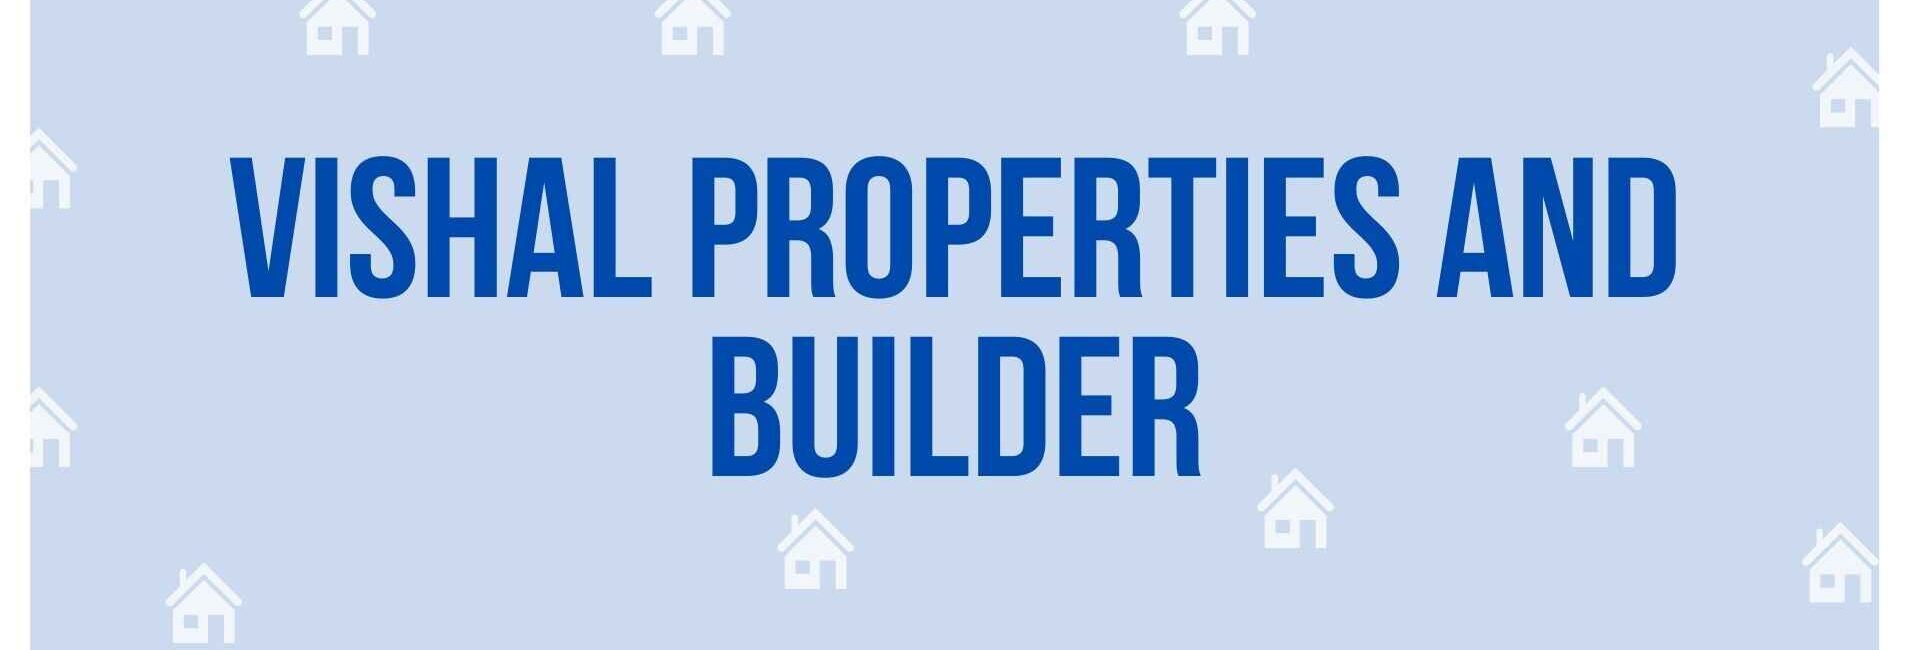 Vishal Properties and Builder - Property Dealer in Noida